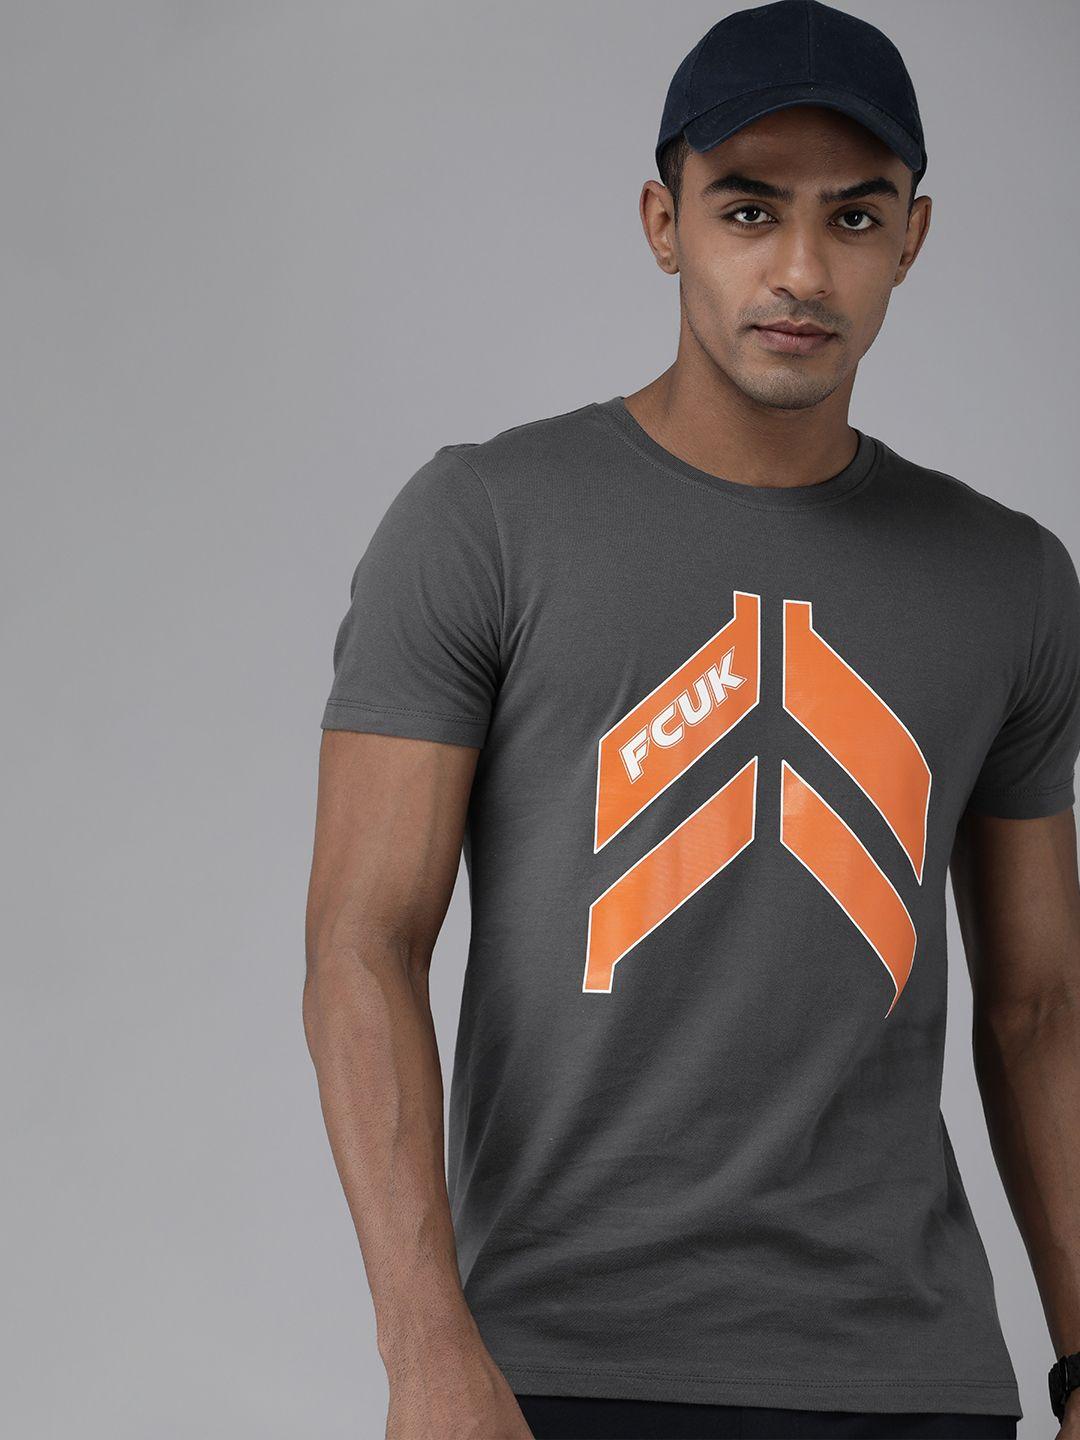 french connection men grey & orange printed slim fit t-shirt